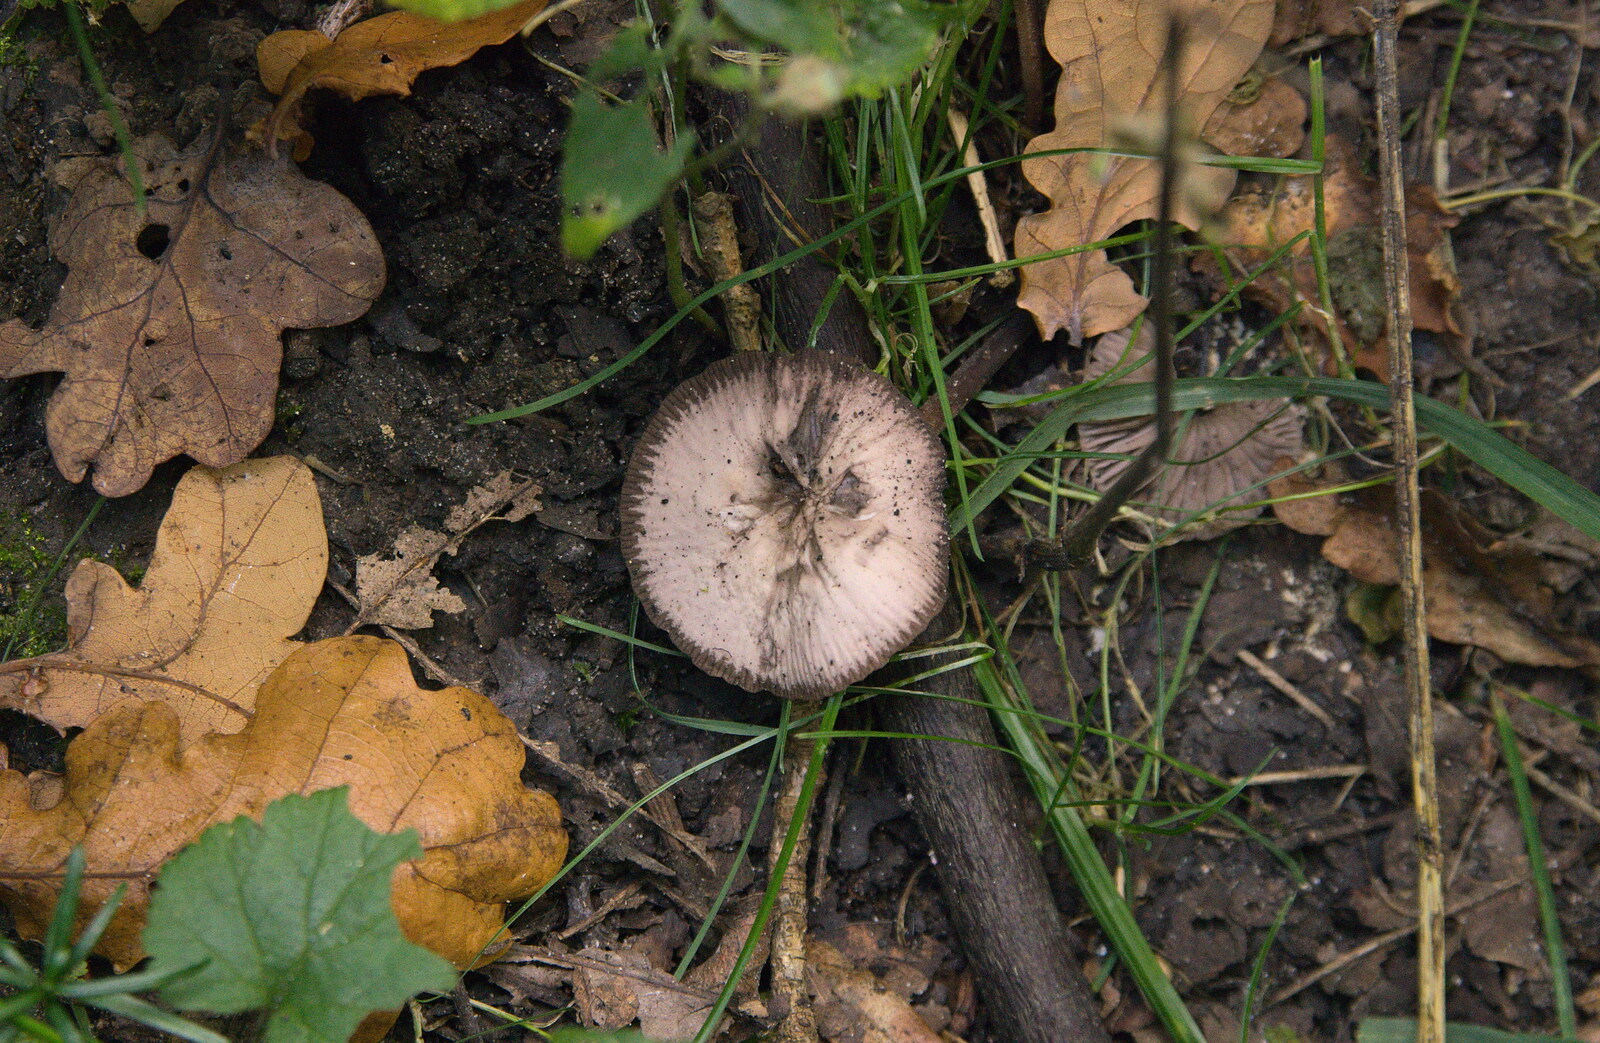 A black-frilled mushroom from The Mushrooms of Thornham Estate, Thornham, Suffolk - 4th October 2015